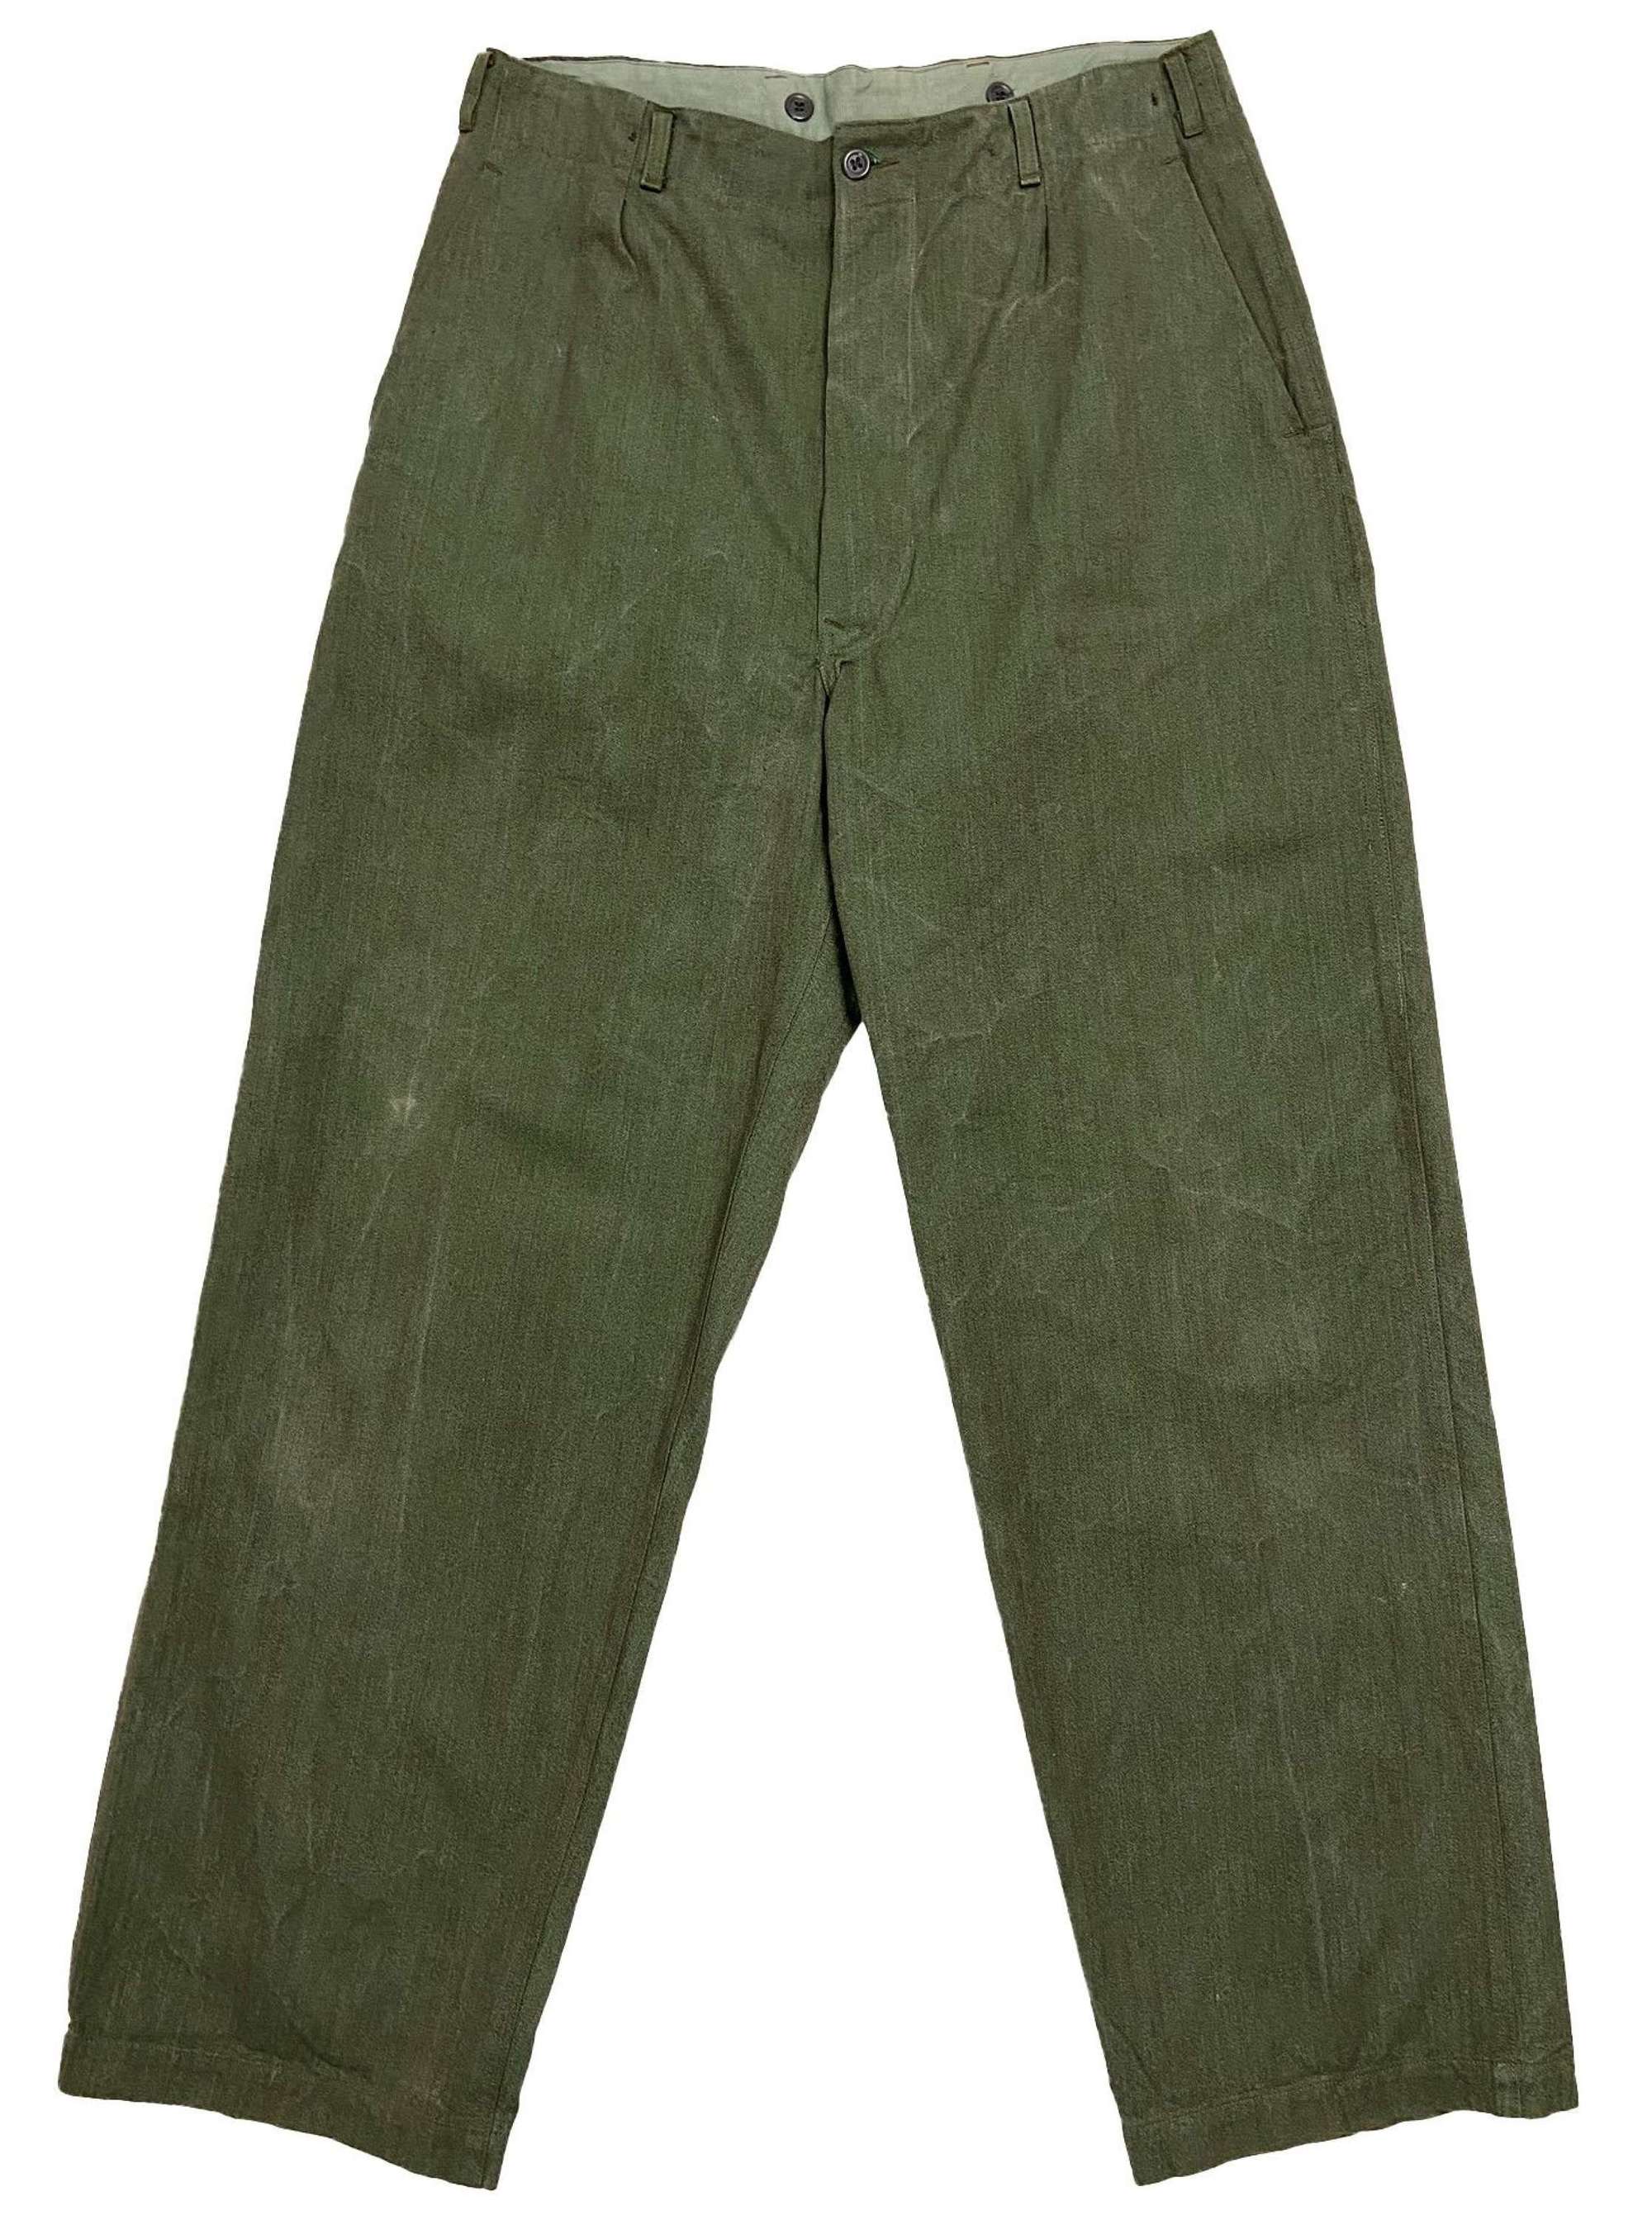 Original 1950s European Military Cinch Back Work Trousers